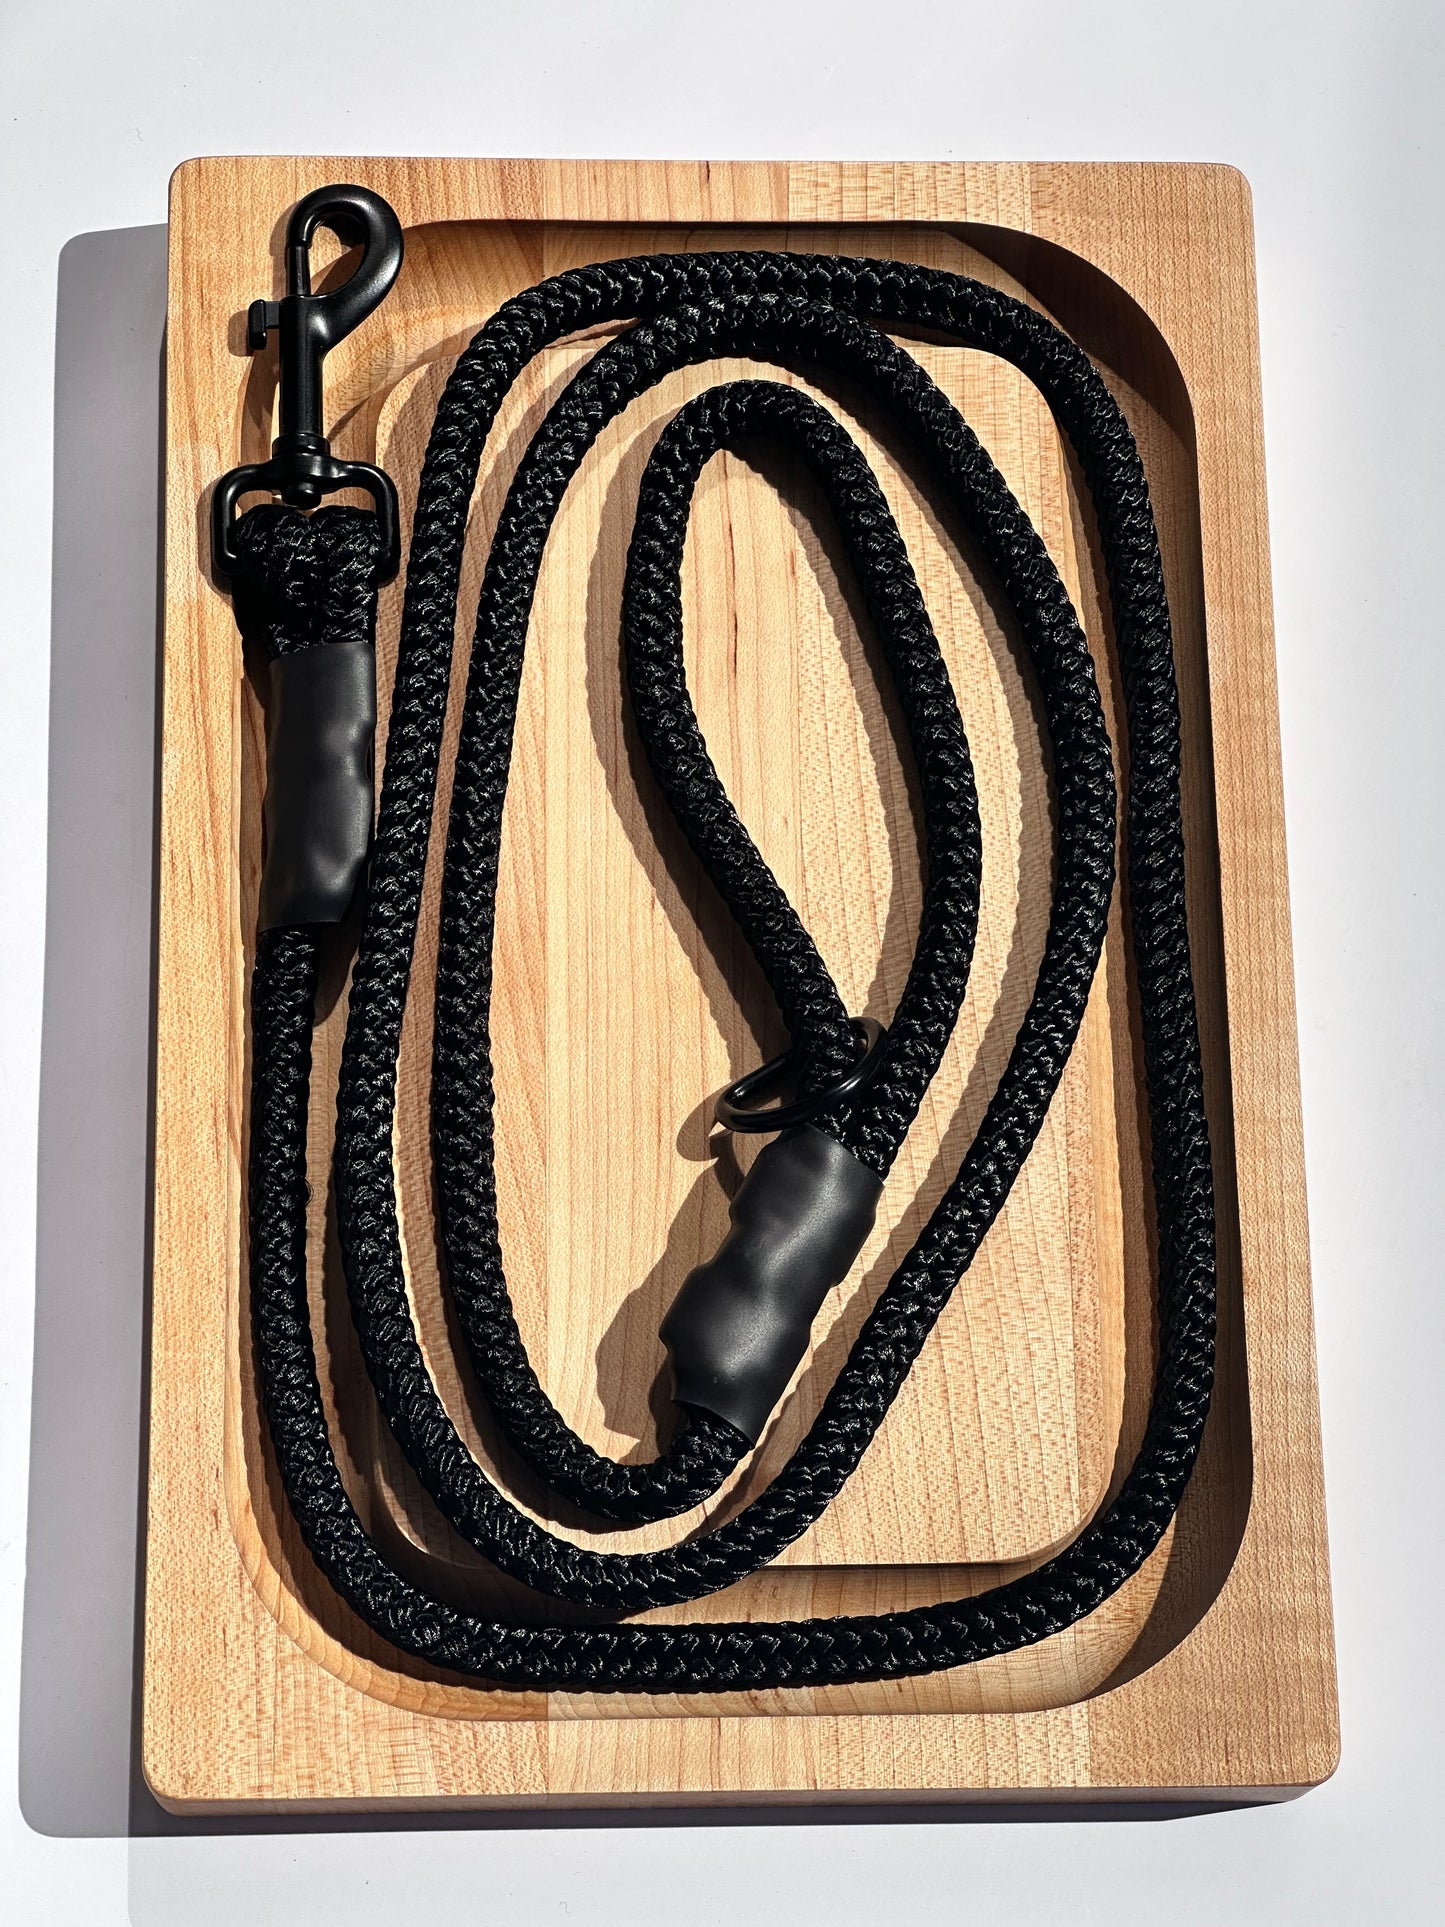 Marine Nylon rope leash with no swing waste bag holder